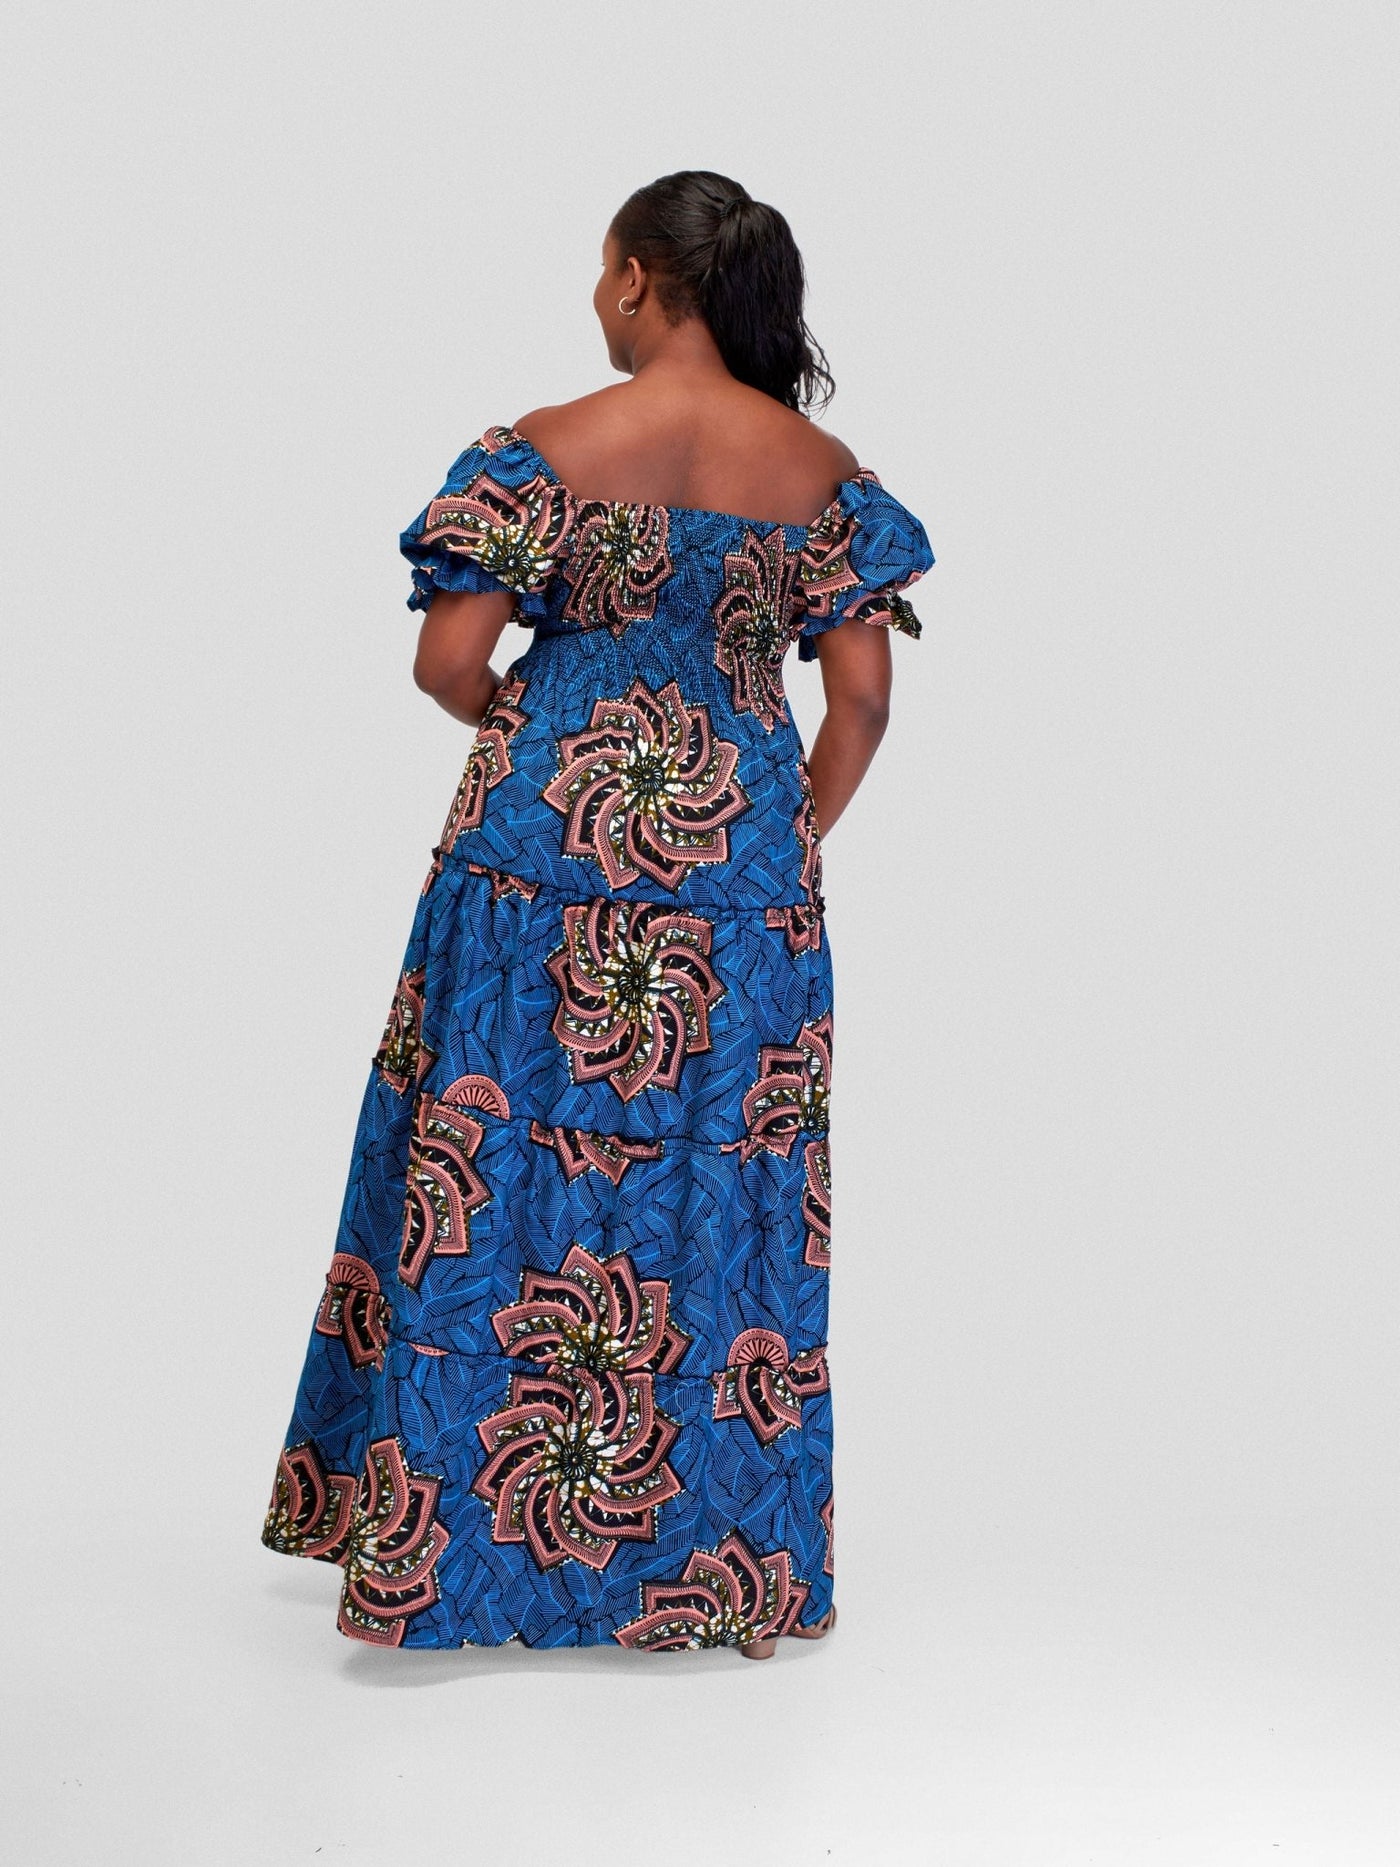 Vivo Kitenge Bustier Maxi Dress - Peach / Blue Abstract Print - Shopzetu